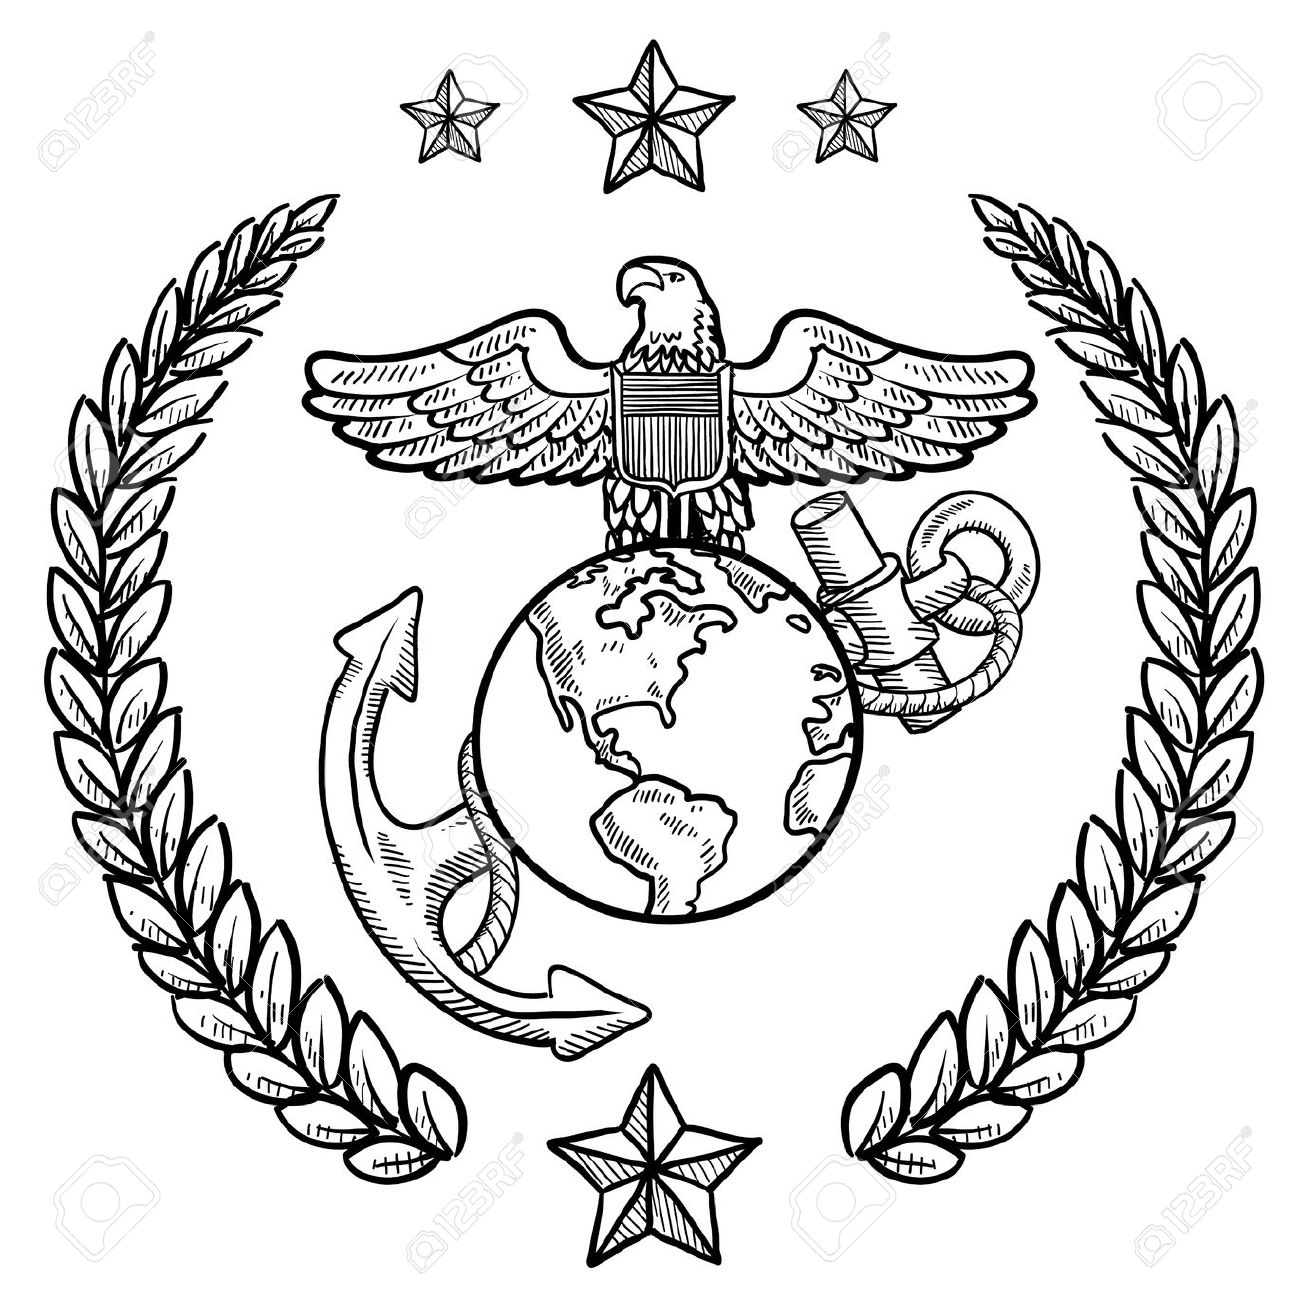 marine corps: Doodle style .